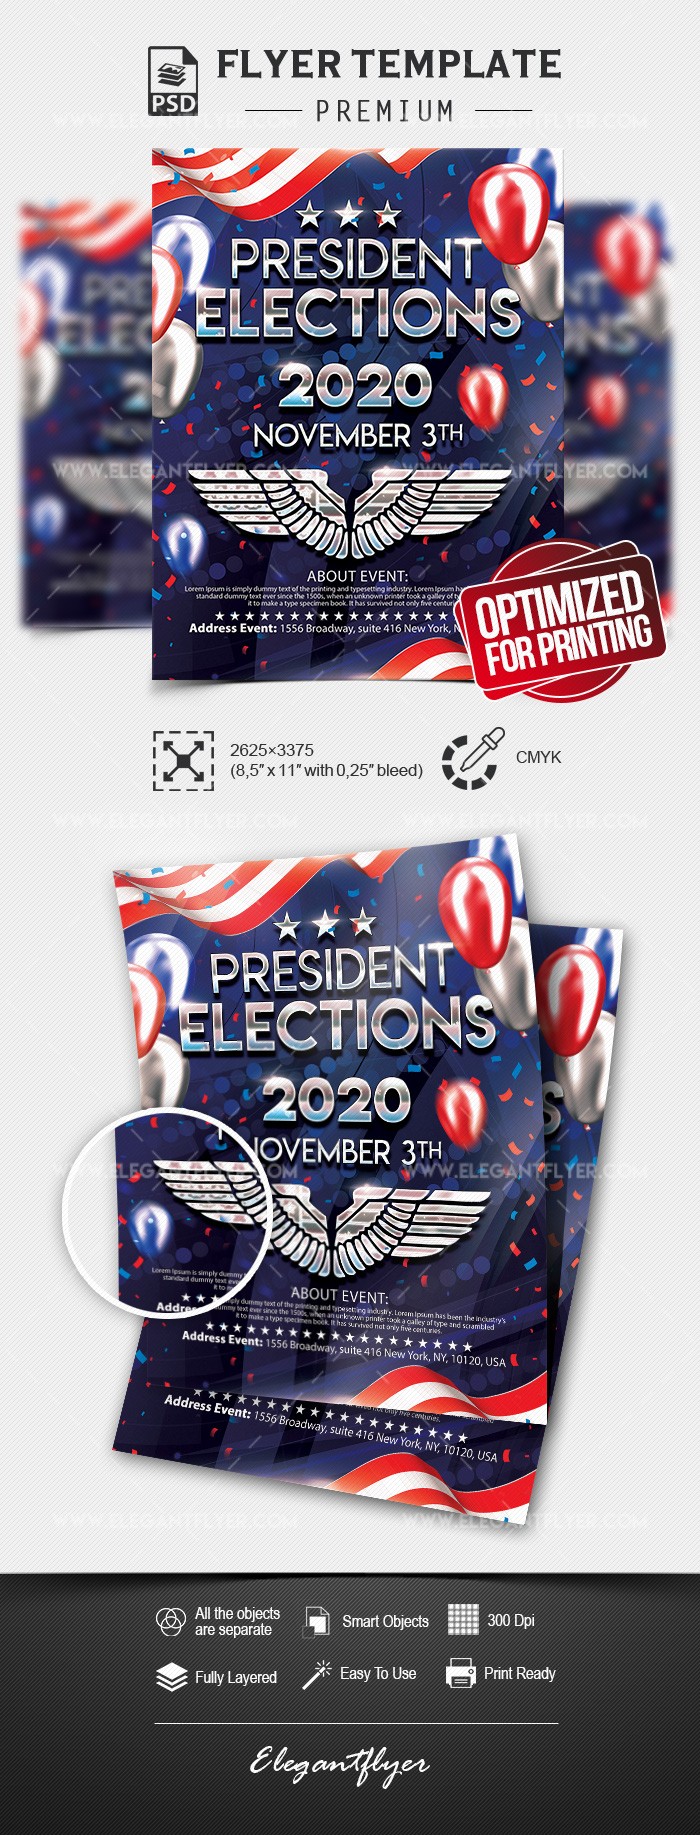 President Elections Flyer by ElegantFlyer